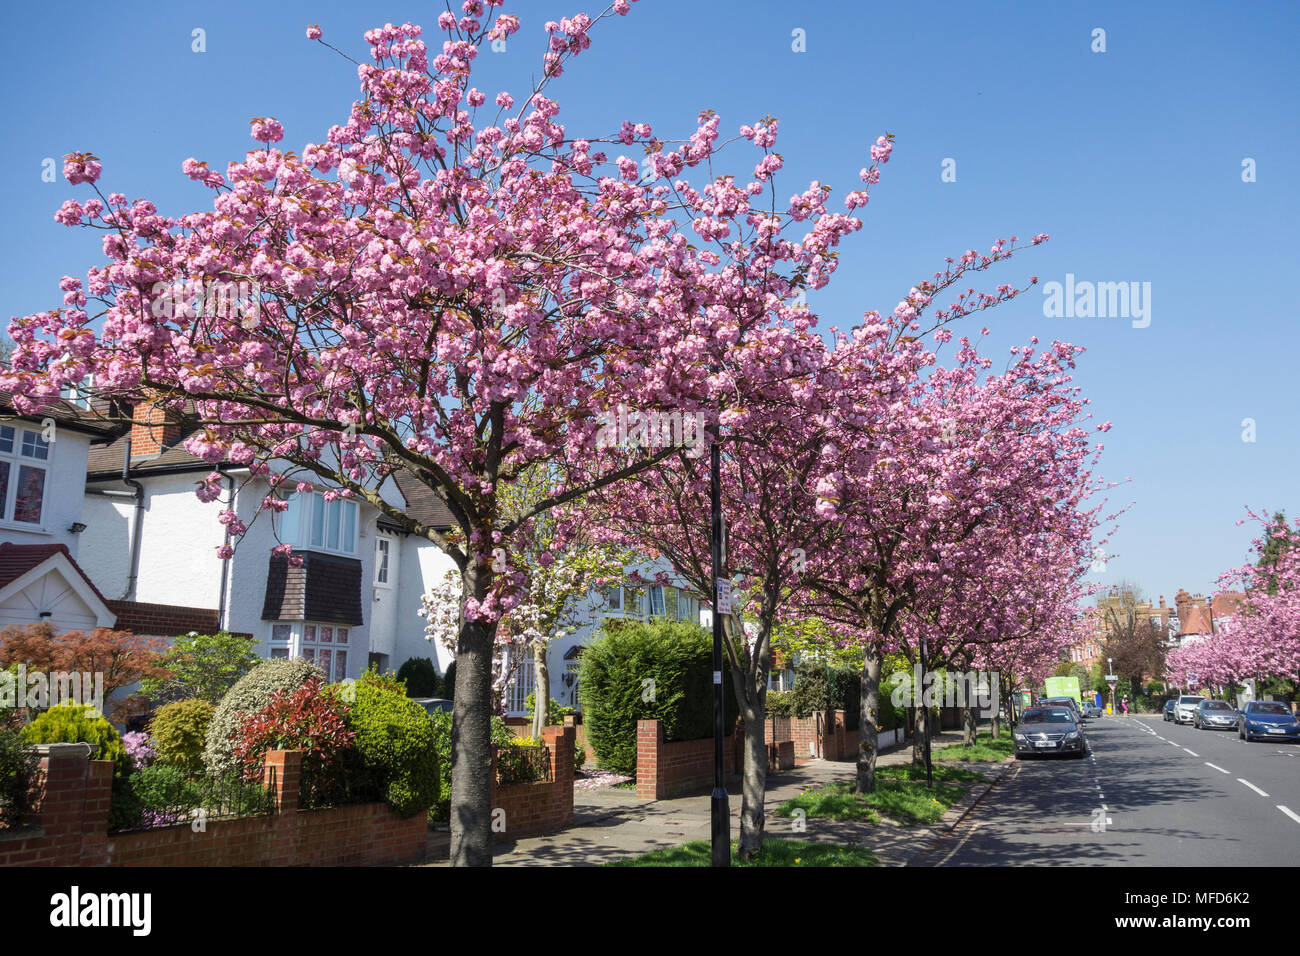 Pink cherry blossom trees (Prunus serrulata) on a suburban street in Chiswick, west London, UK Stock Photo